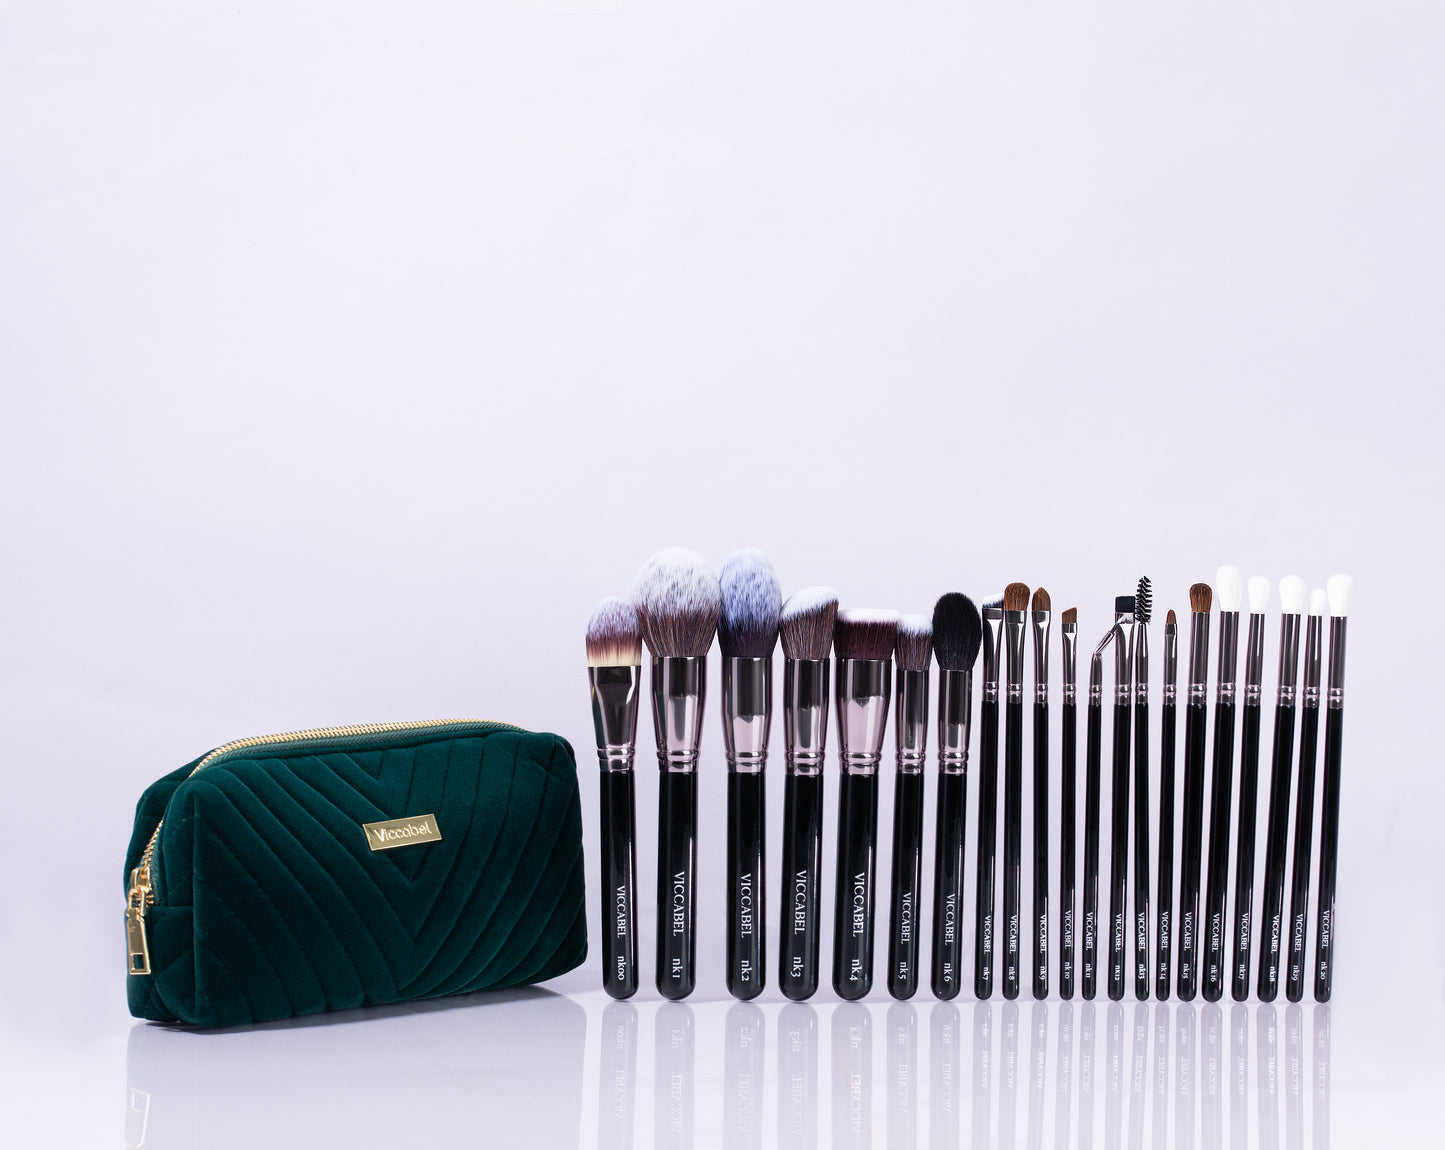 Deluxe pro 21 piece makeup brush set